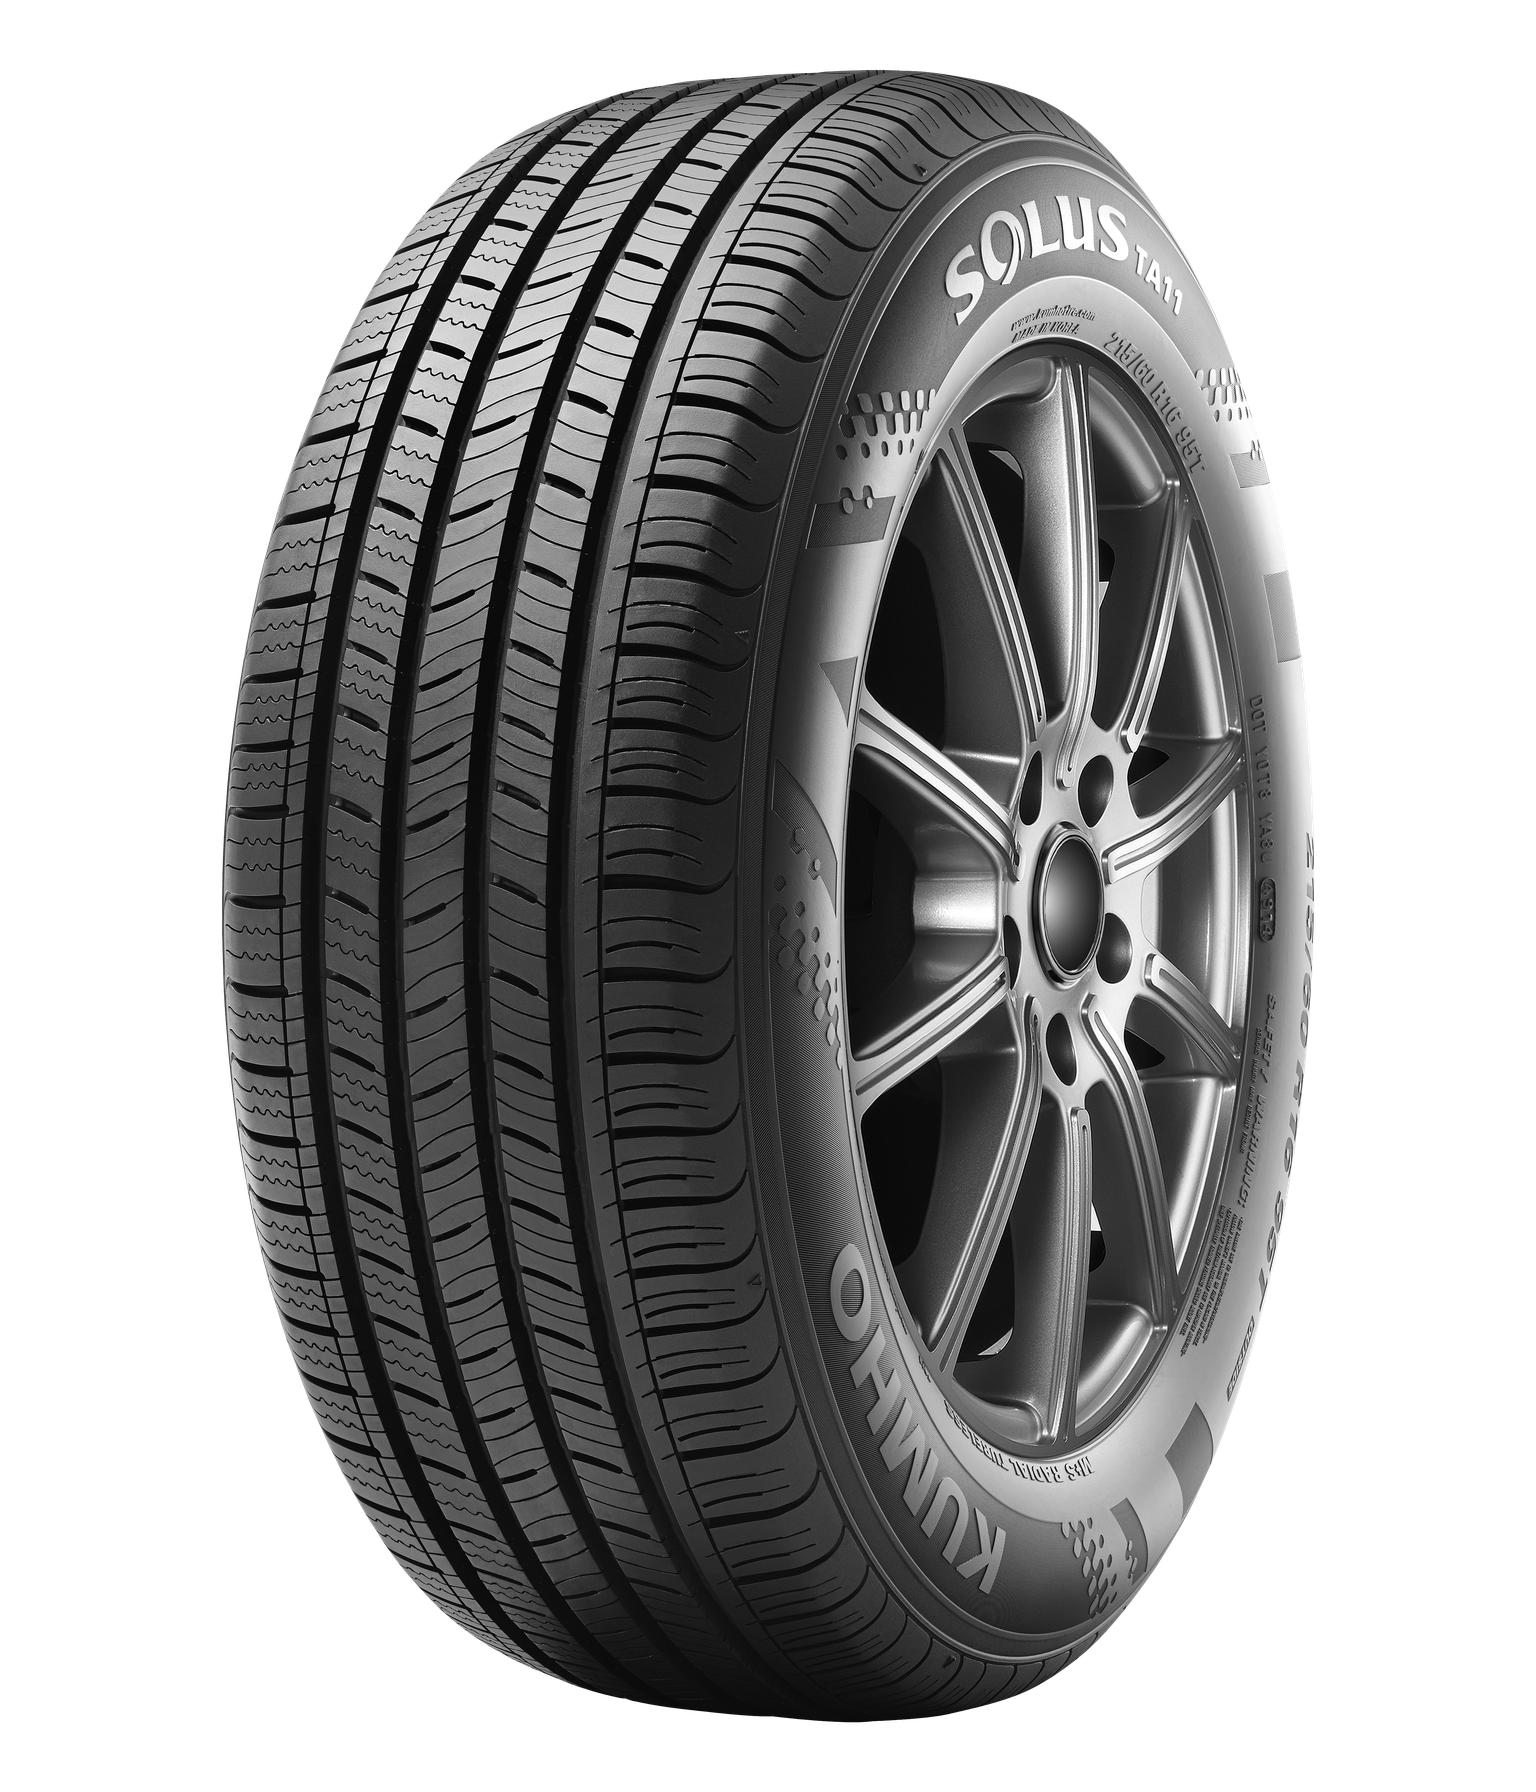 195//50R16 84W Kumho Ecsta 4X II Performance Radial Tire